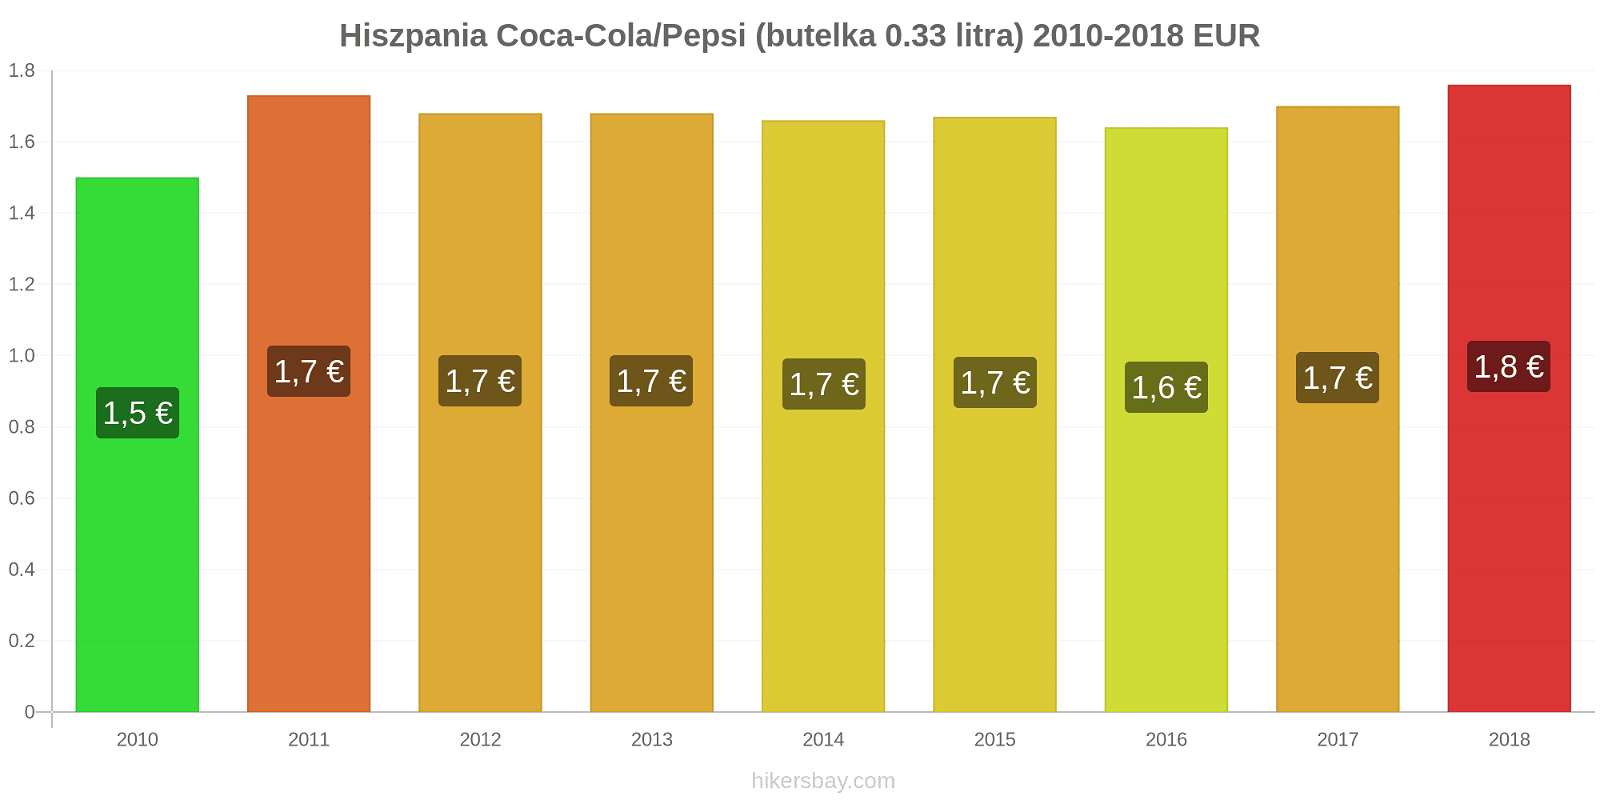 Hiszpania zmiany cen Coca-Cola/Pepsi (butelka 0.33 litra) hikersbay.com